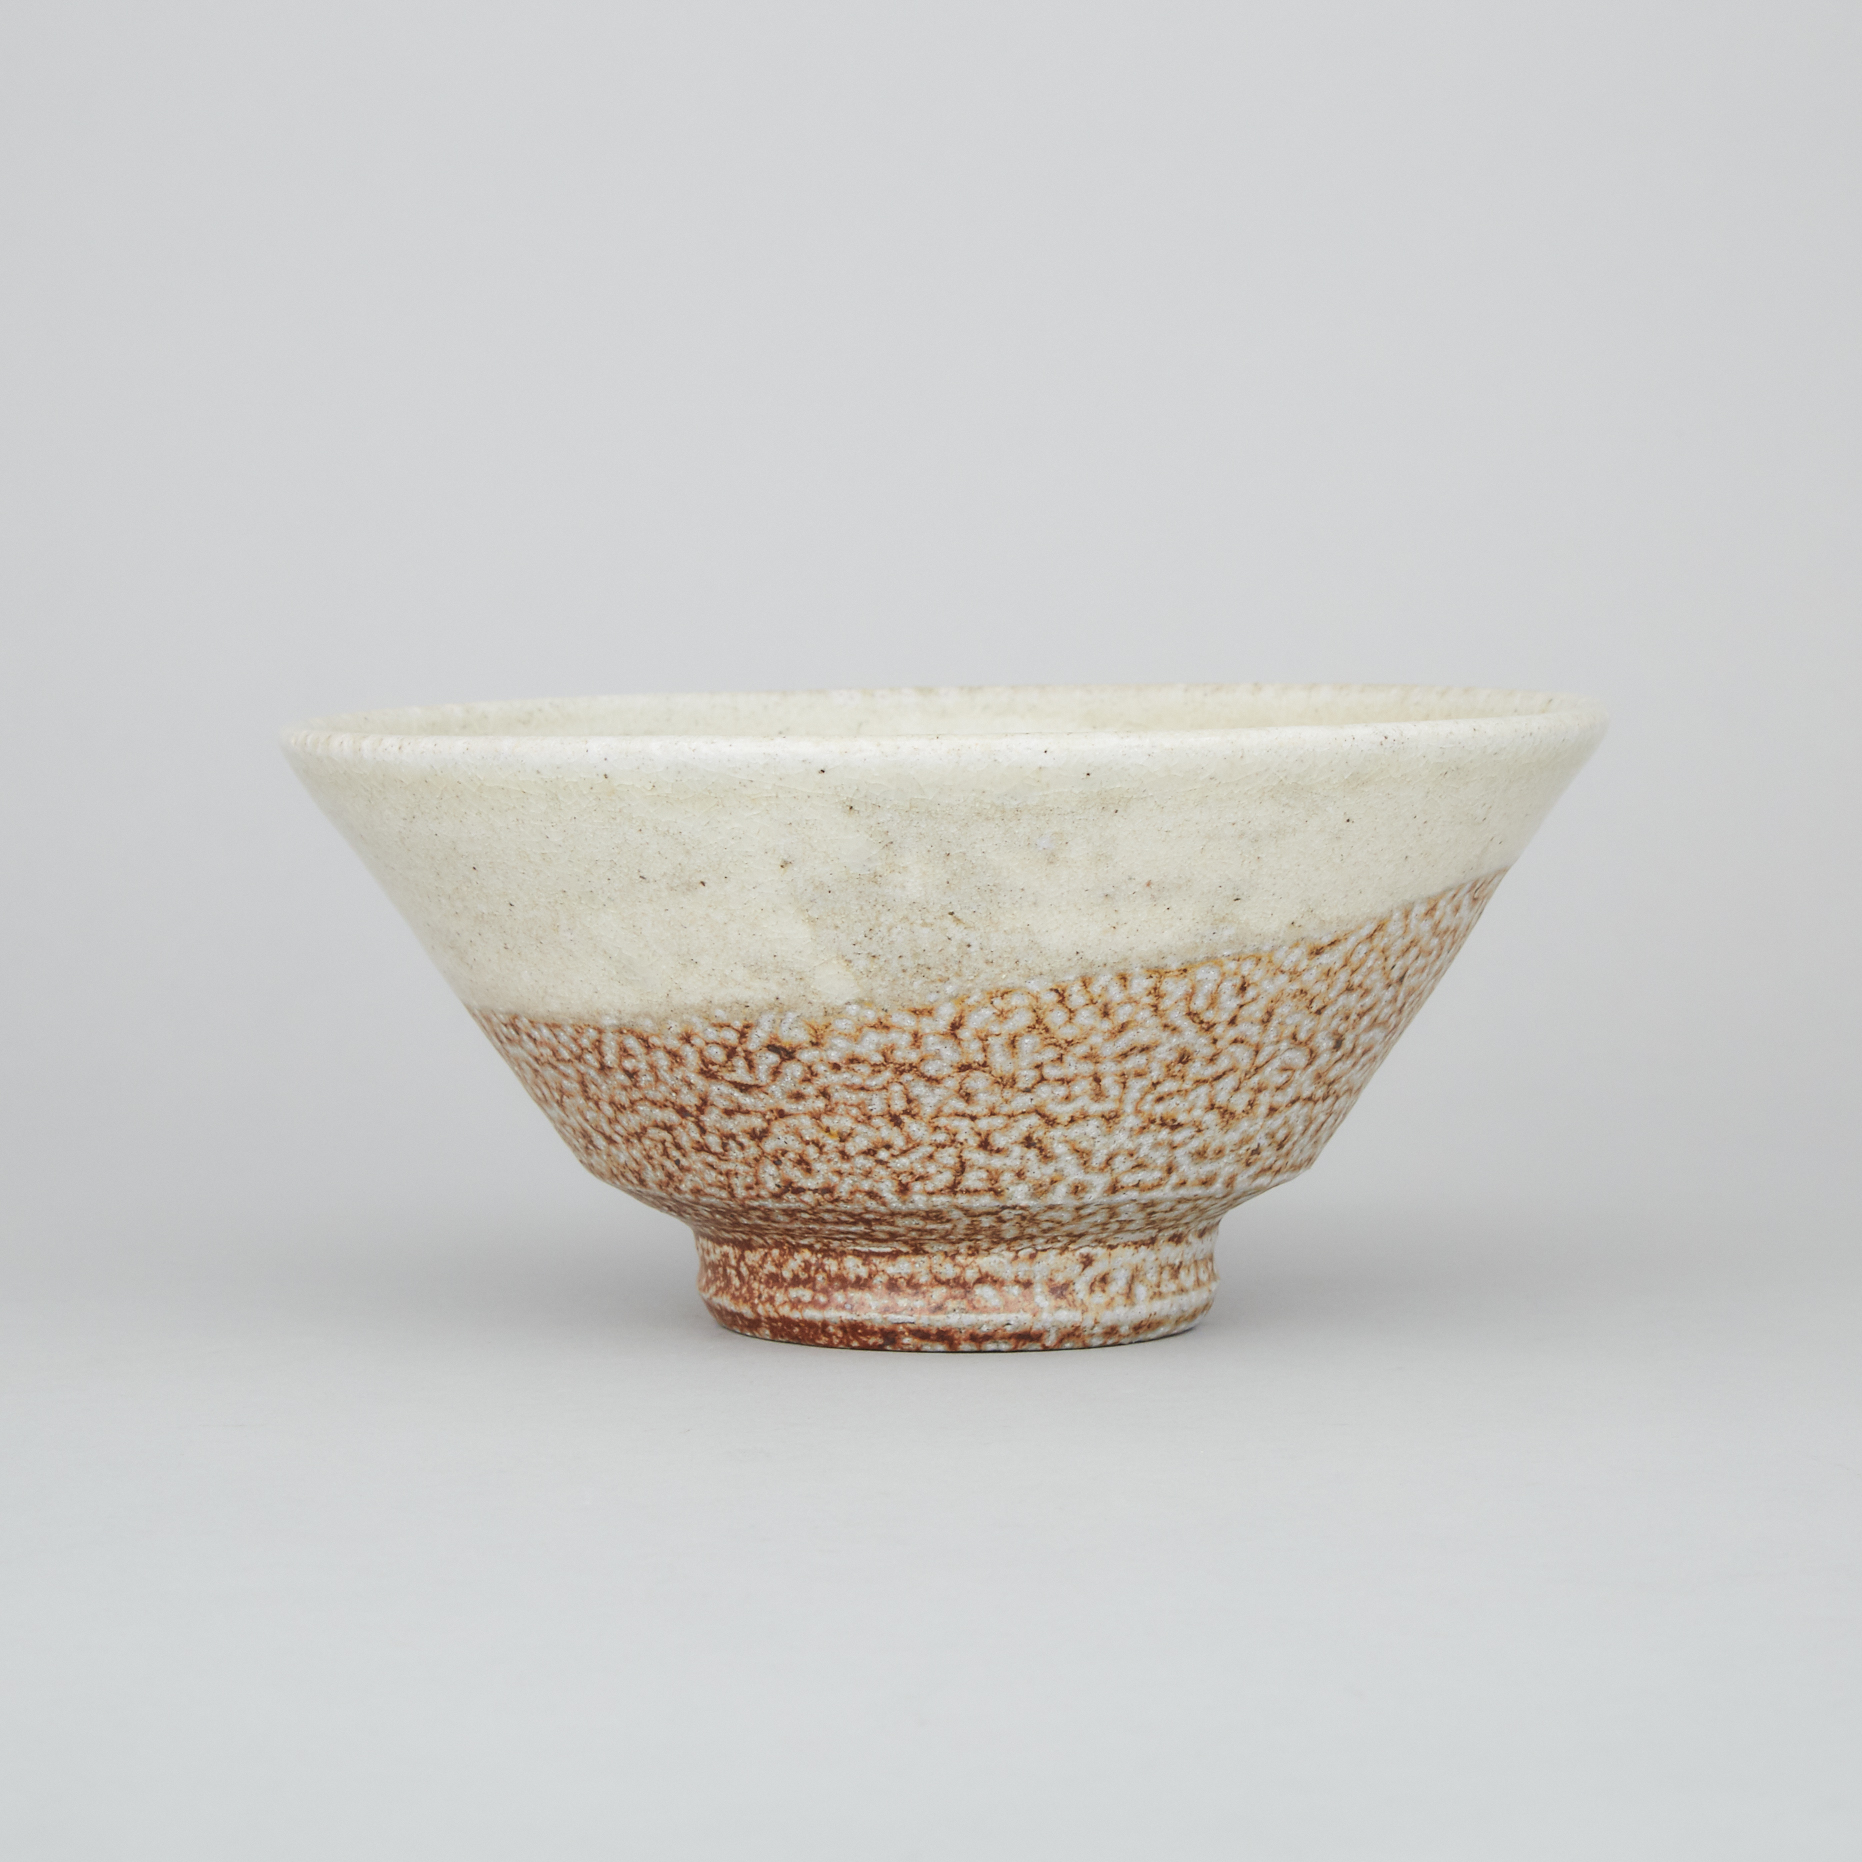 Robert Archambeau (Canadian, b.1933), Glazed Stoneware Bowl, c.1994